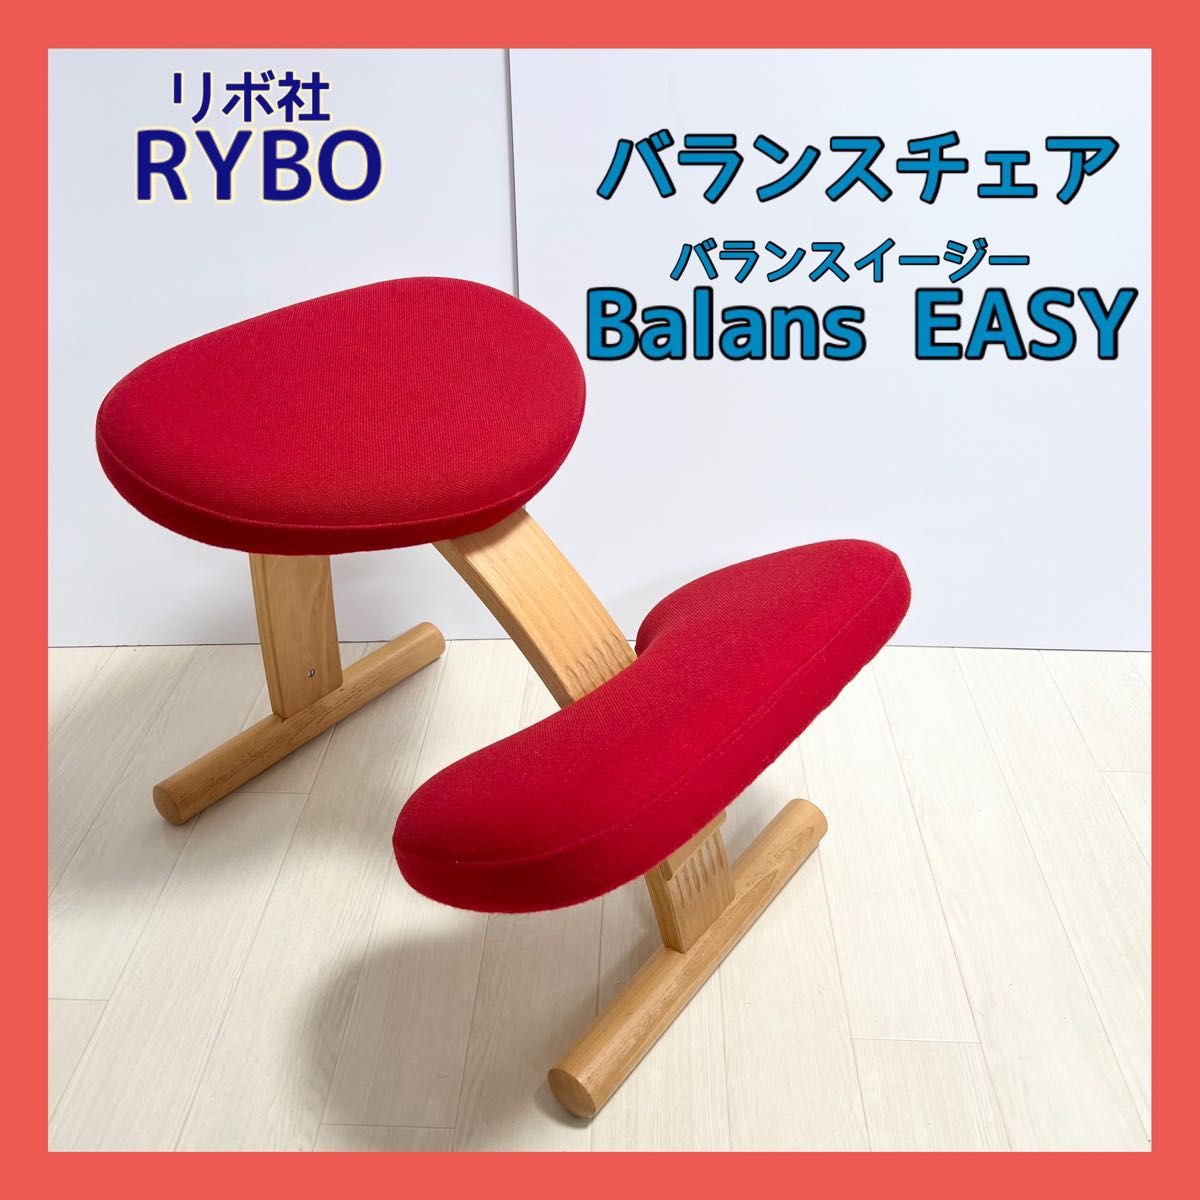 Rybo社Balans EASY リボ バランスチェアイージー 姿勢改善 - チェア